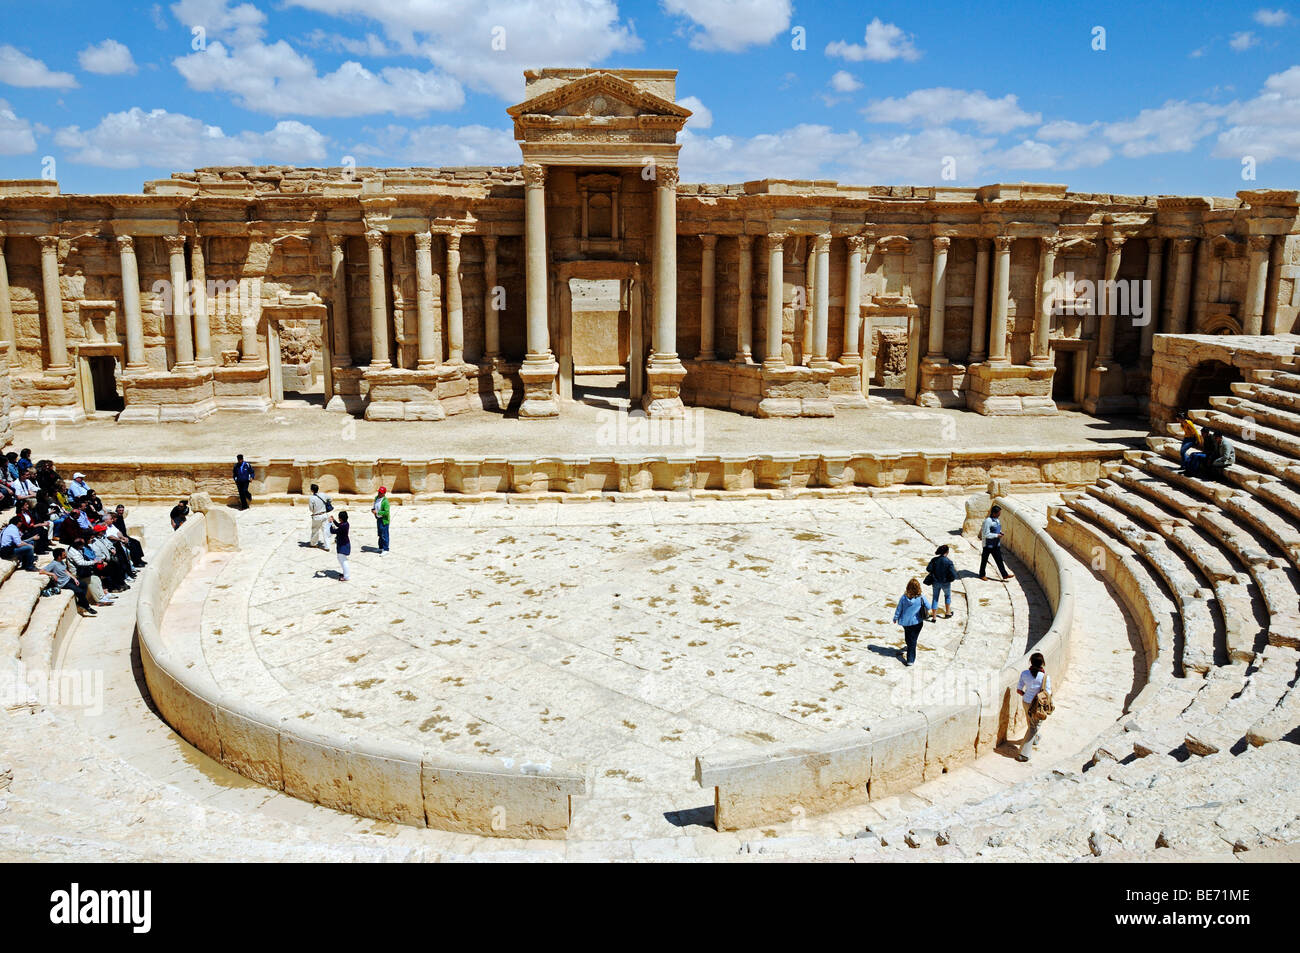 Teatro en las ruinas de Palmira, sitio arqueológico de Tadmur, Siria, Asia Foto de stock